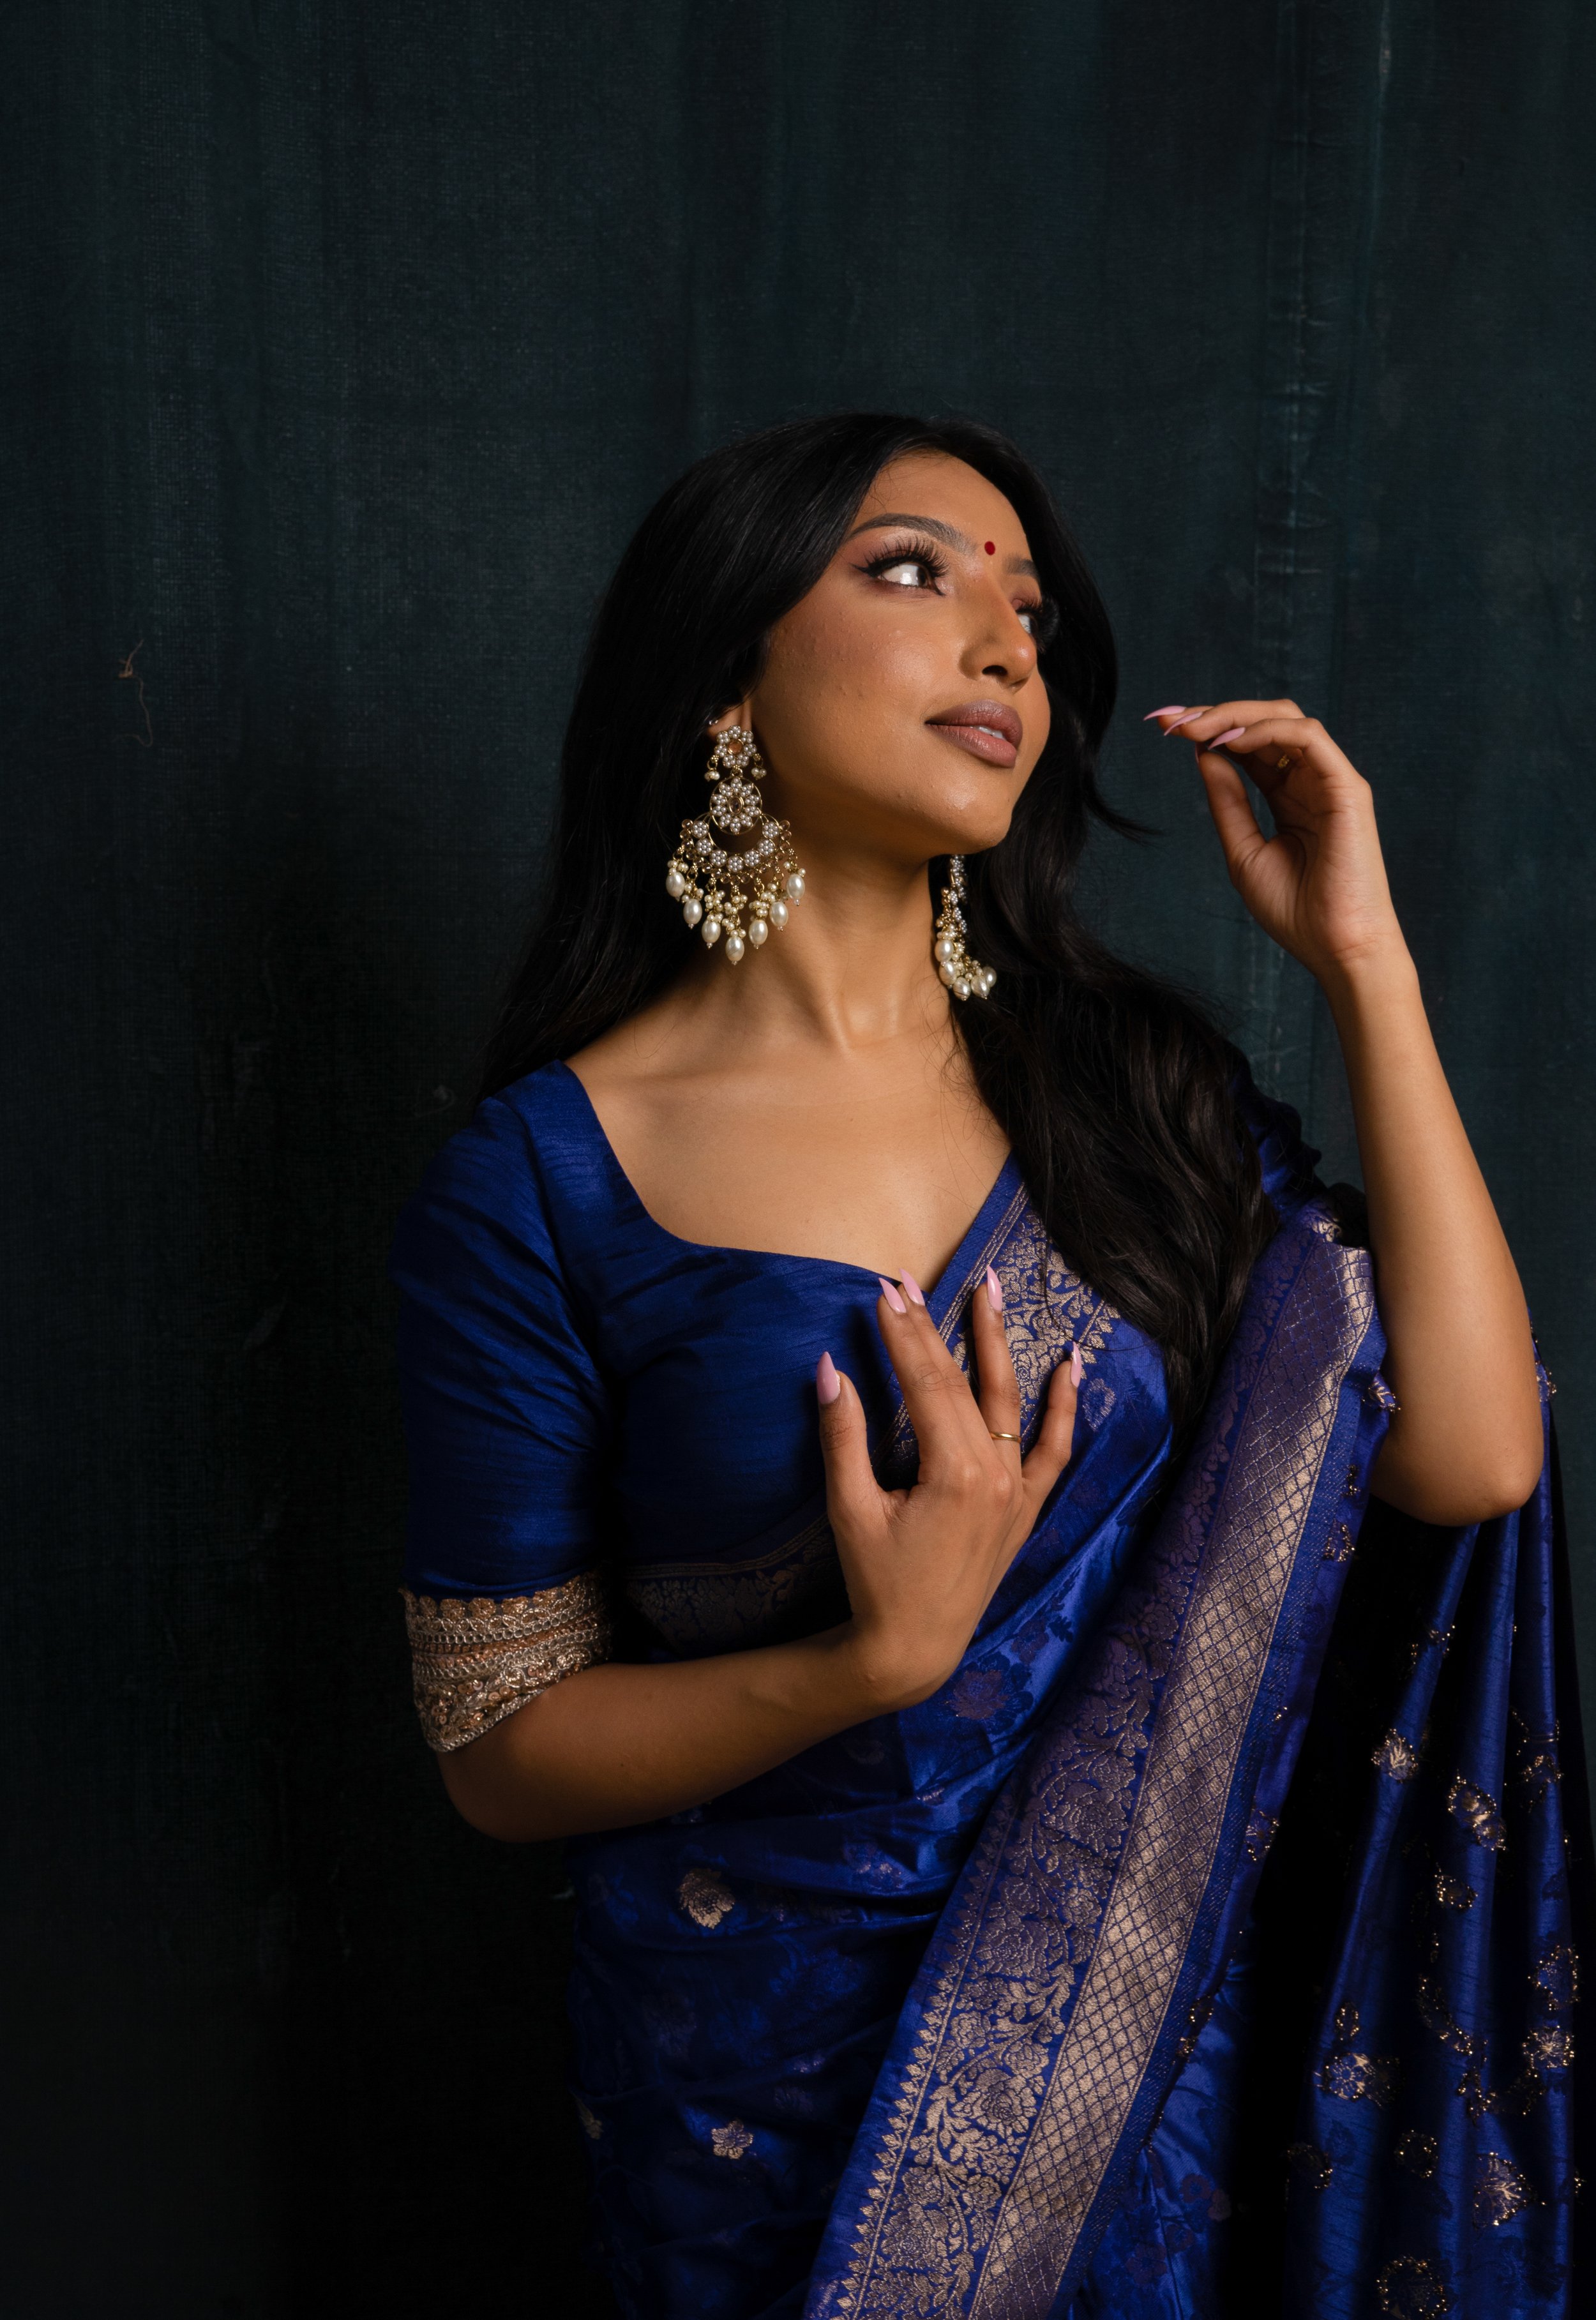 Loukiya on X: Her maternity photoshoot #saree #SareeTwitter #sareeblouse # sareelook #Bollywood #bollywoodfashion #bollywodstyle #bridalsaree  #indianwedding #Desi #desiweeding #indianfashion #southasianbride  #southasian #southindian #southasianlook